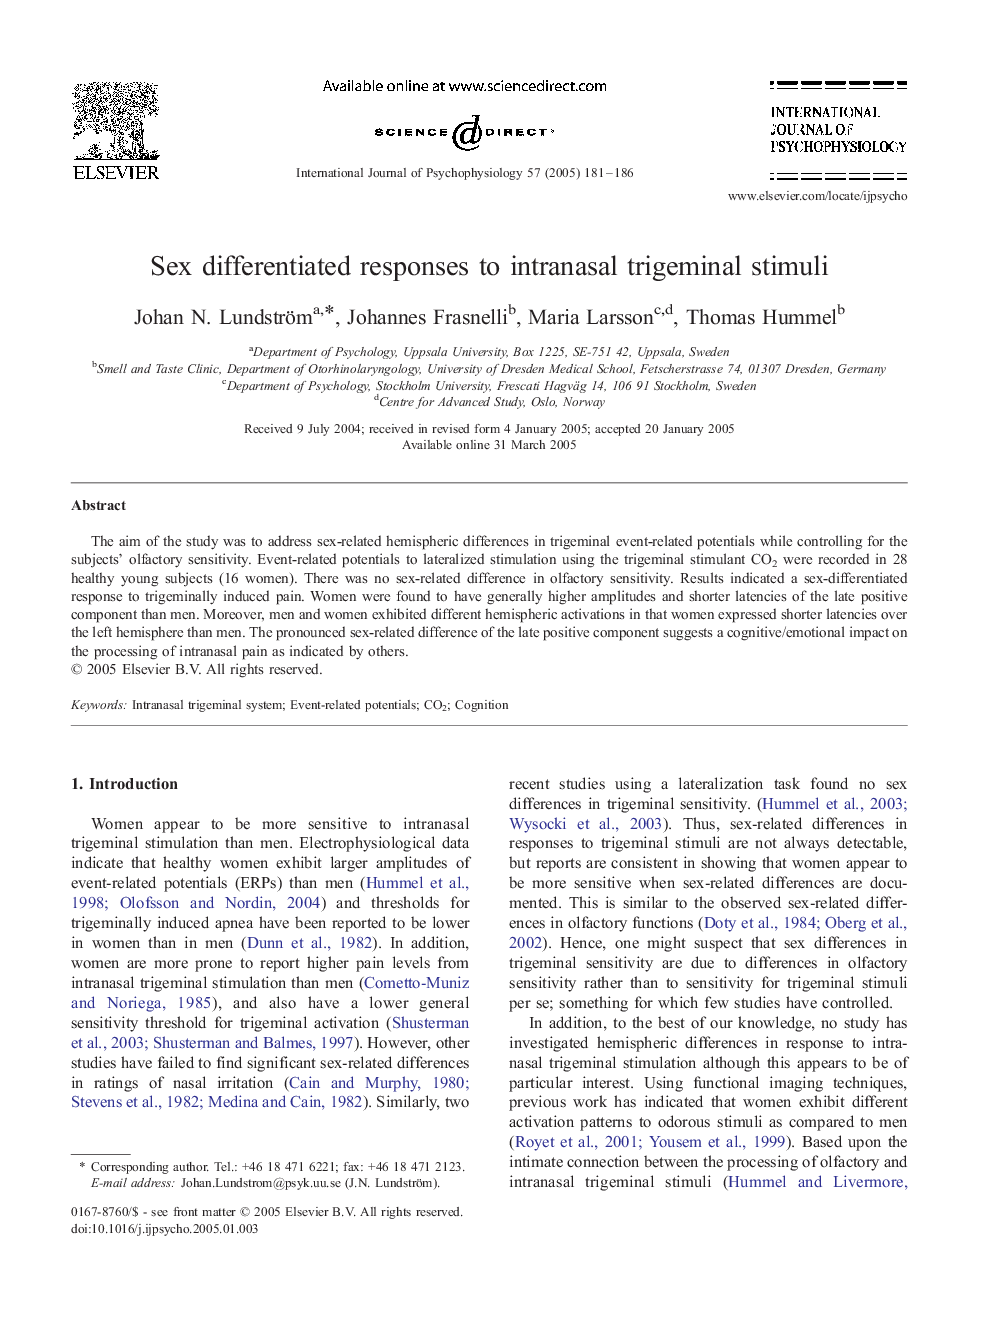 Sex differentiated responses to intranasal trigeminal stimuli